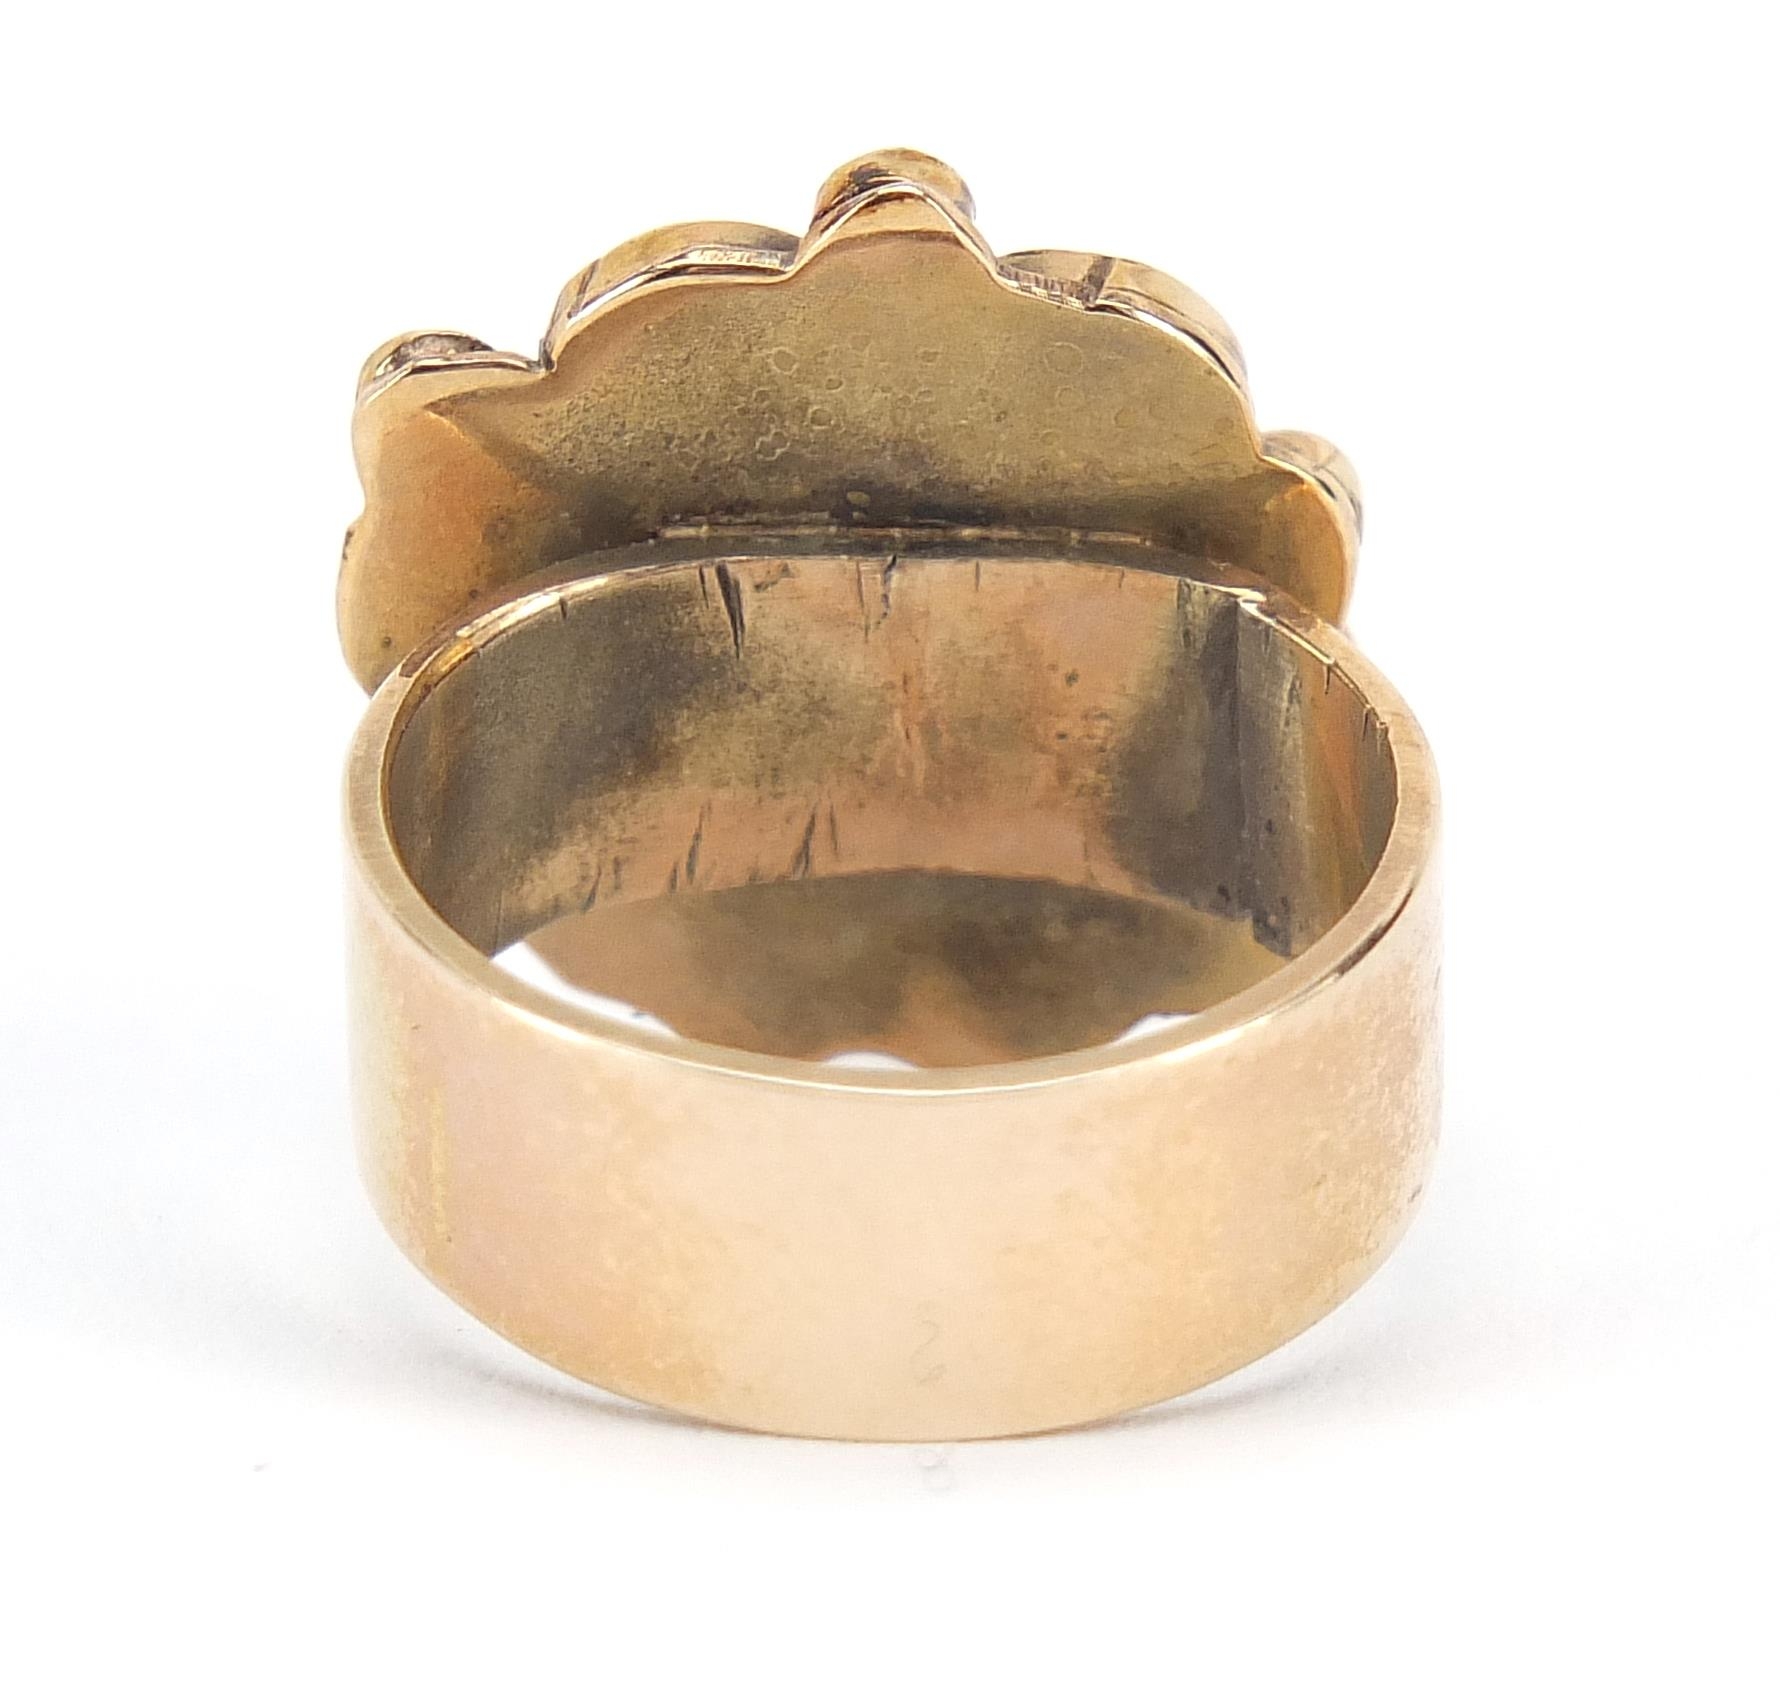 Modernist 9ct gold flower head design ring, AM makers mark, size J, 6.8g - Image 2 of 3